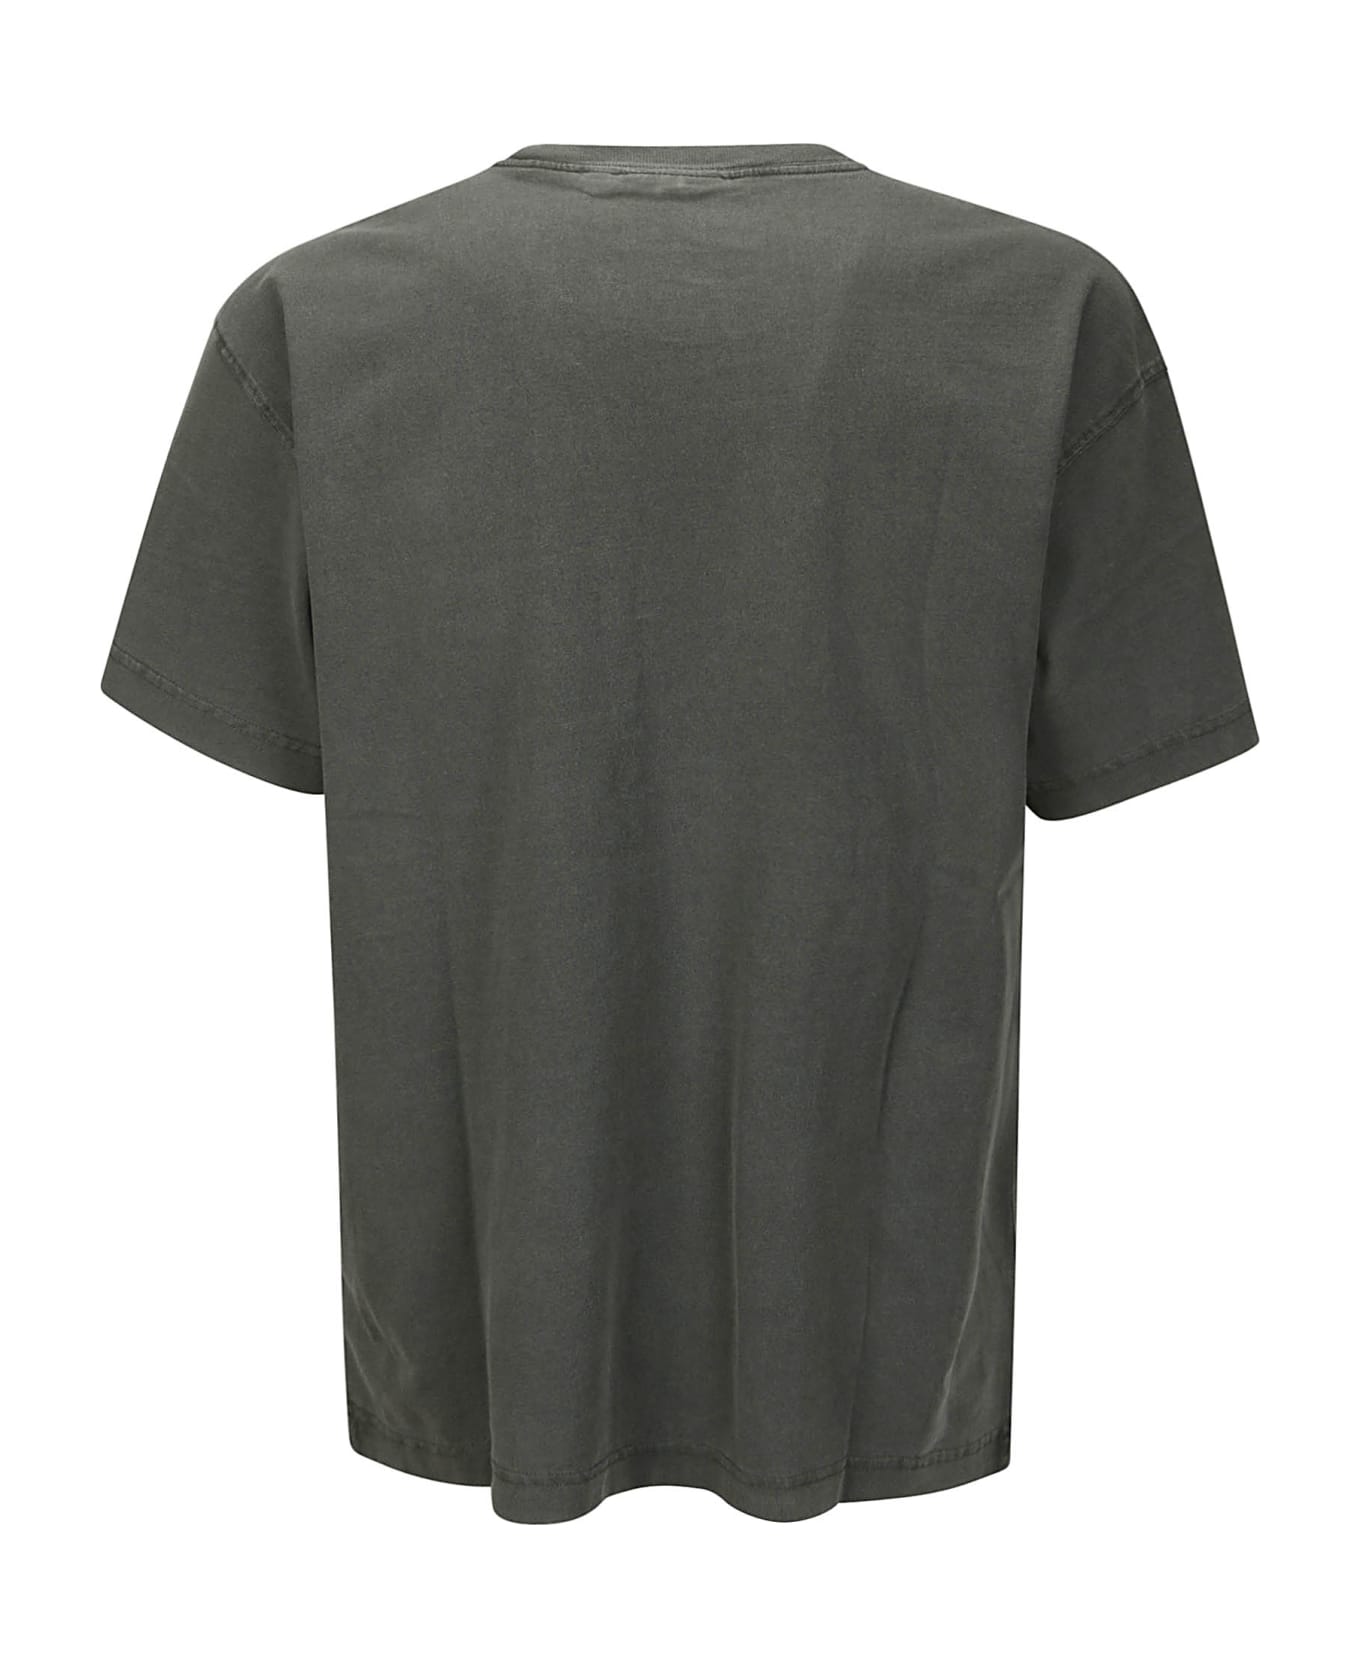 Carhartt S/s Nelson T-shirt Cotton Single Jersey - CHARCOAL